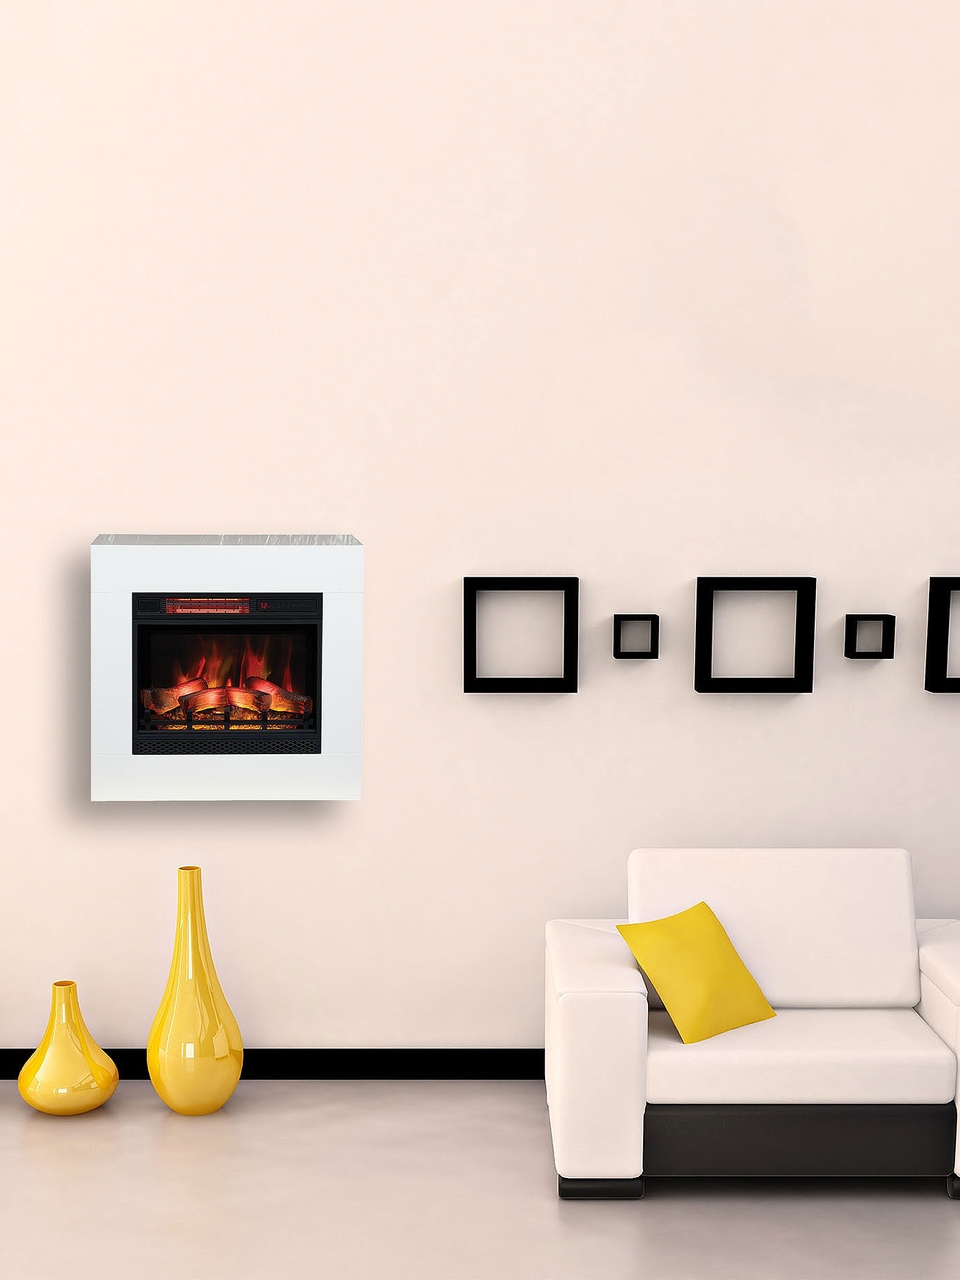 Image: Chair, vases, decor, design, fireplace, frame